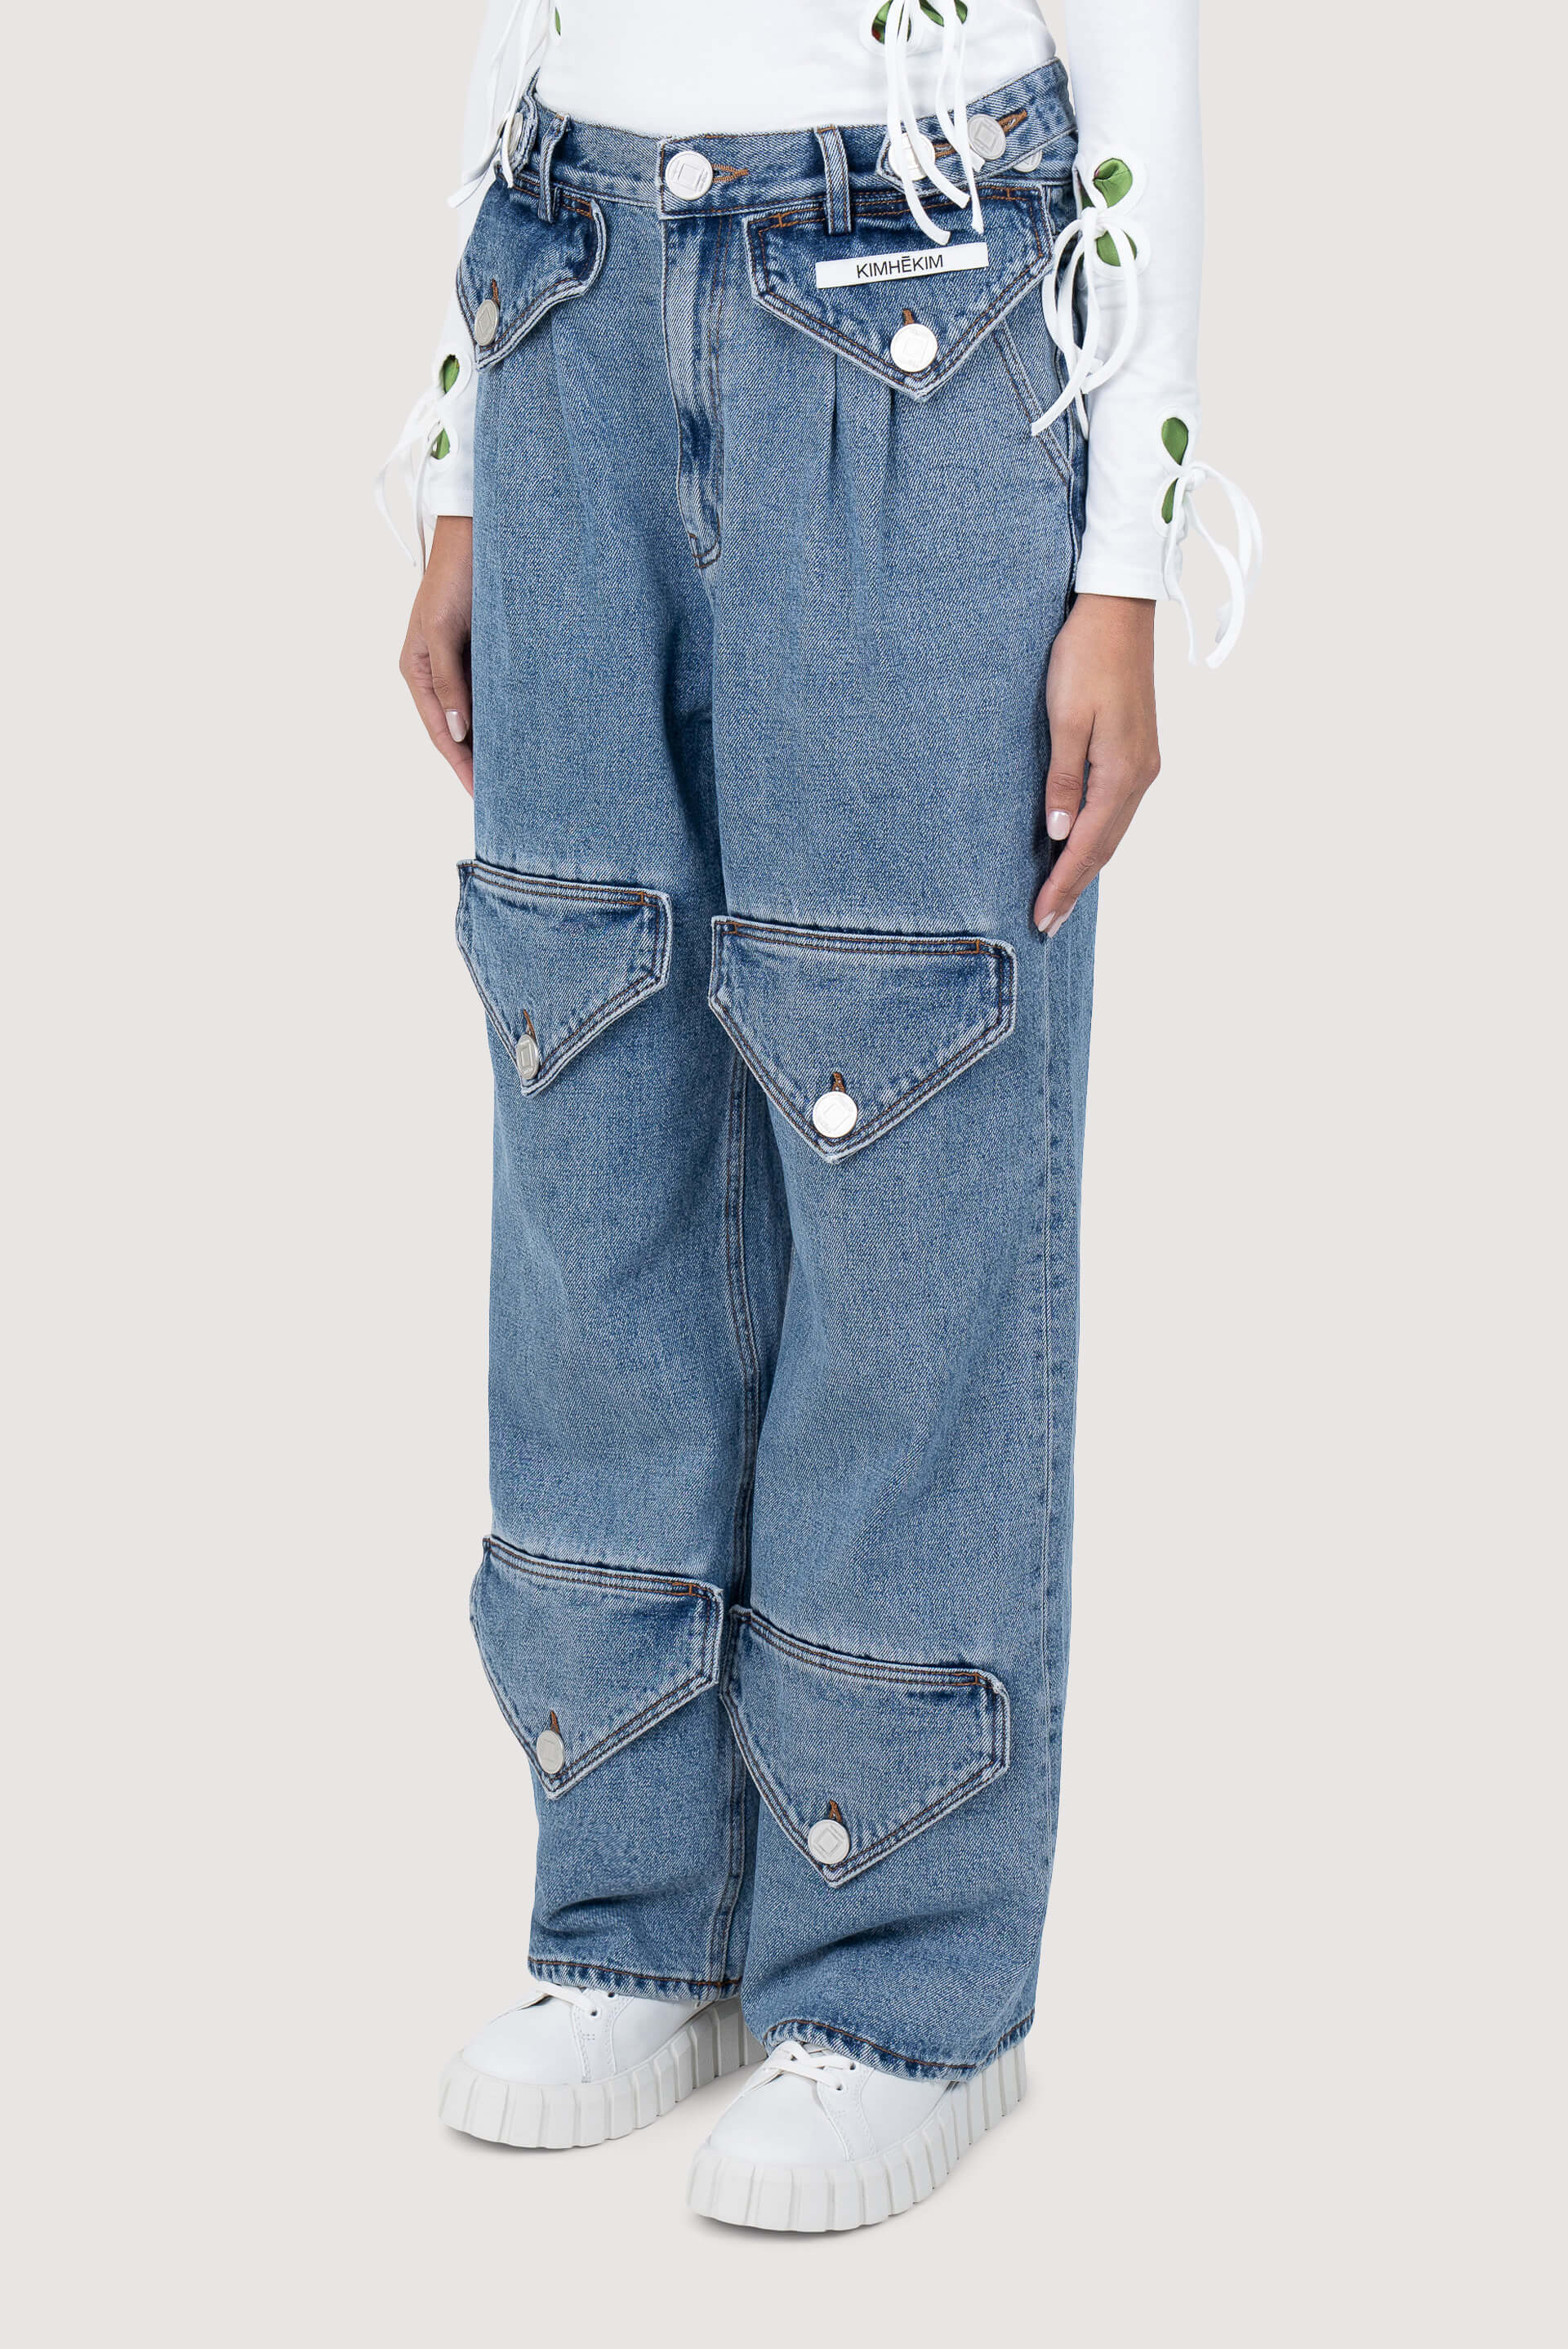 Buy the Multi-pocket Cargo Pants - Streetwear Society